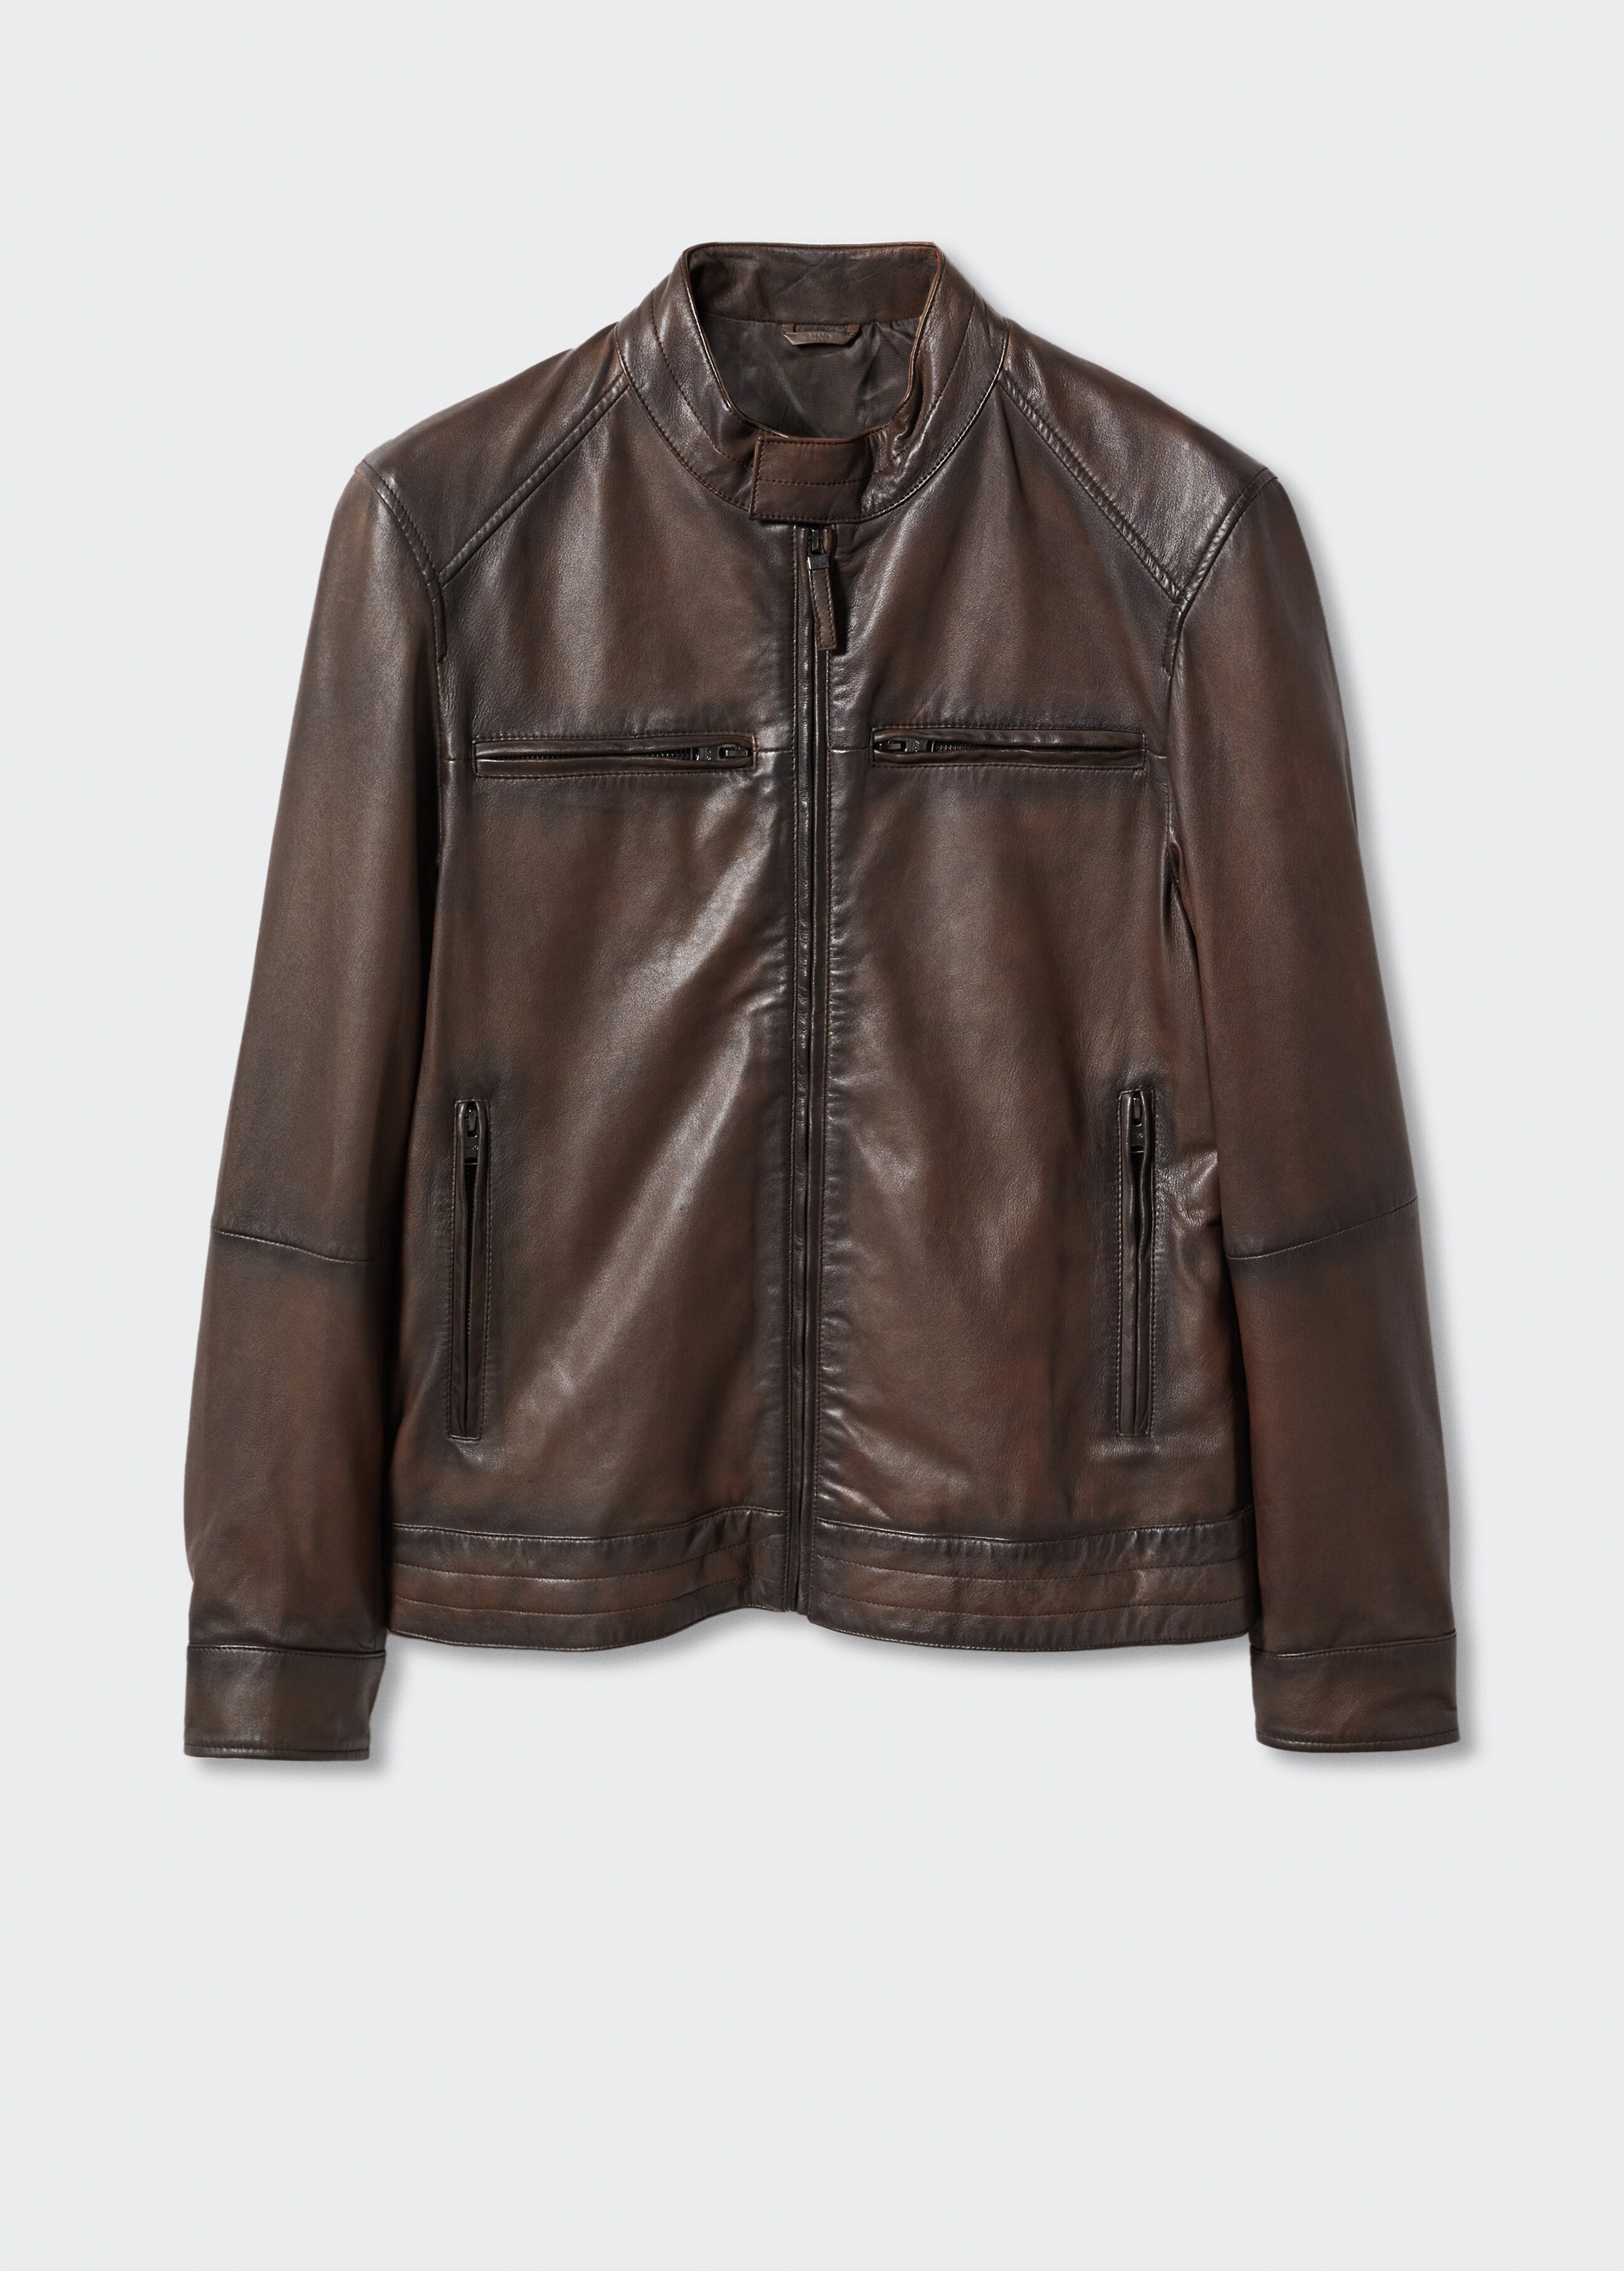 Pocket leather jacket - Article without model